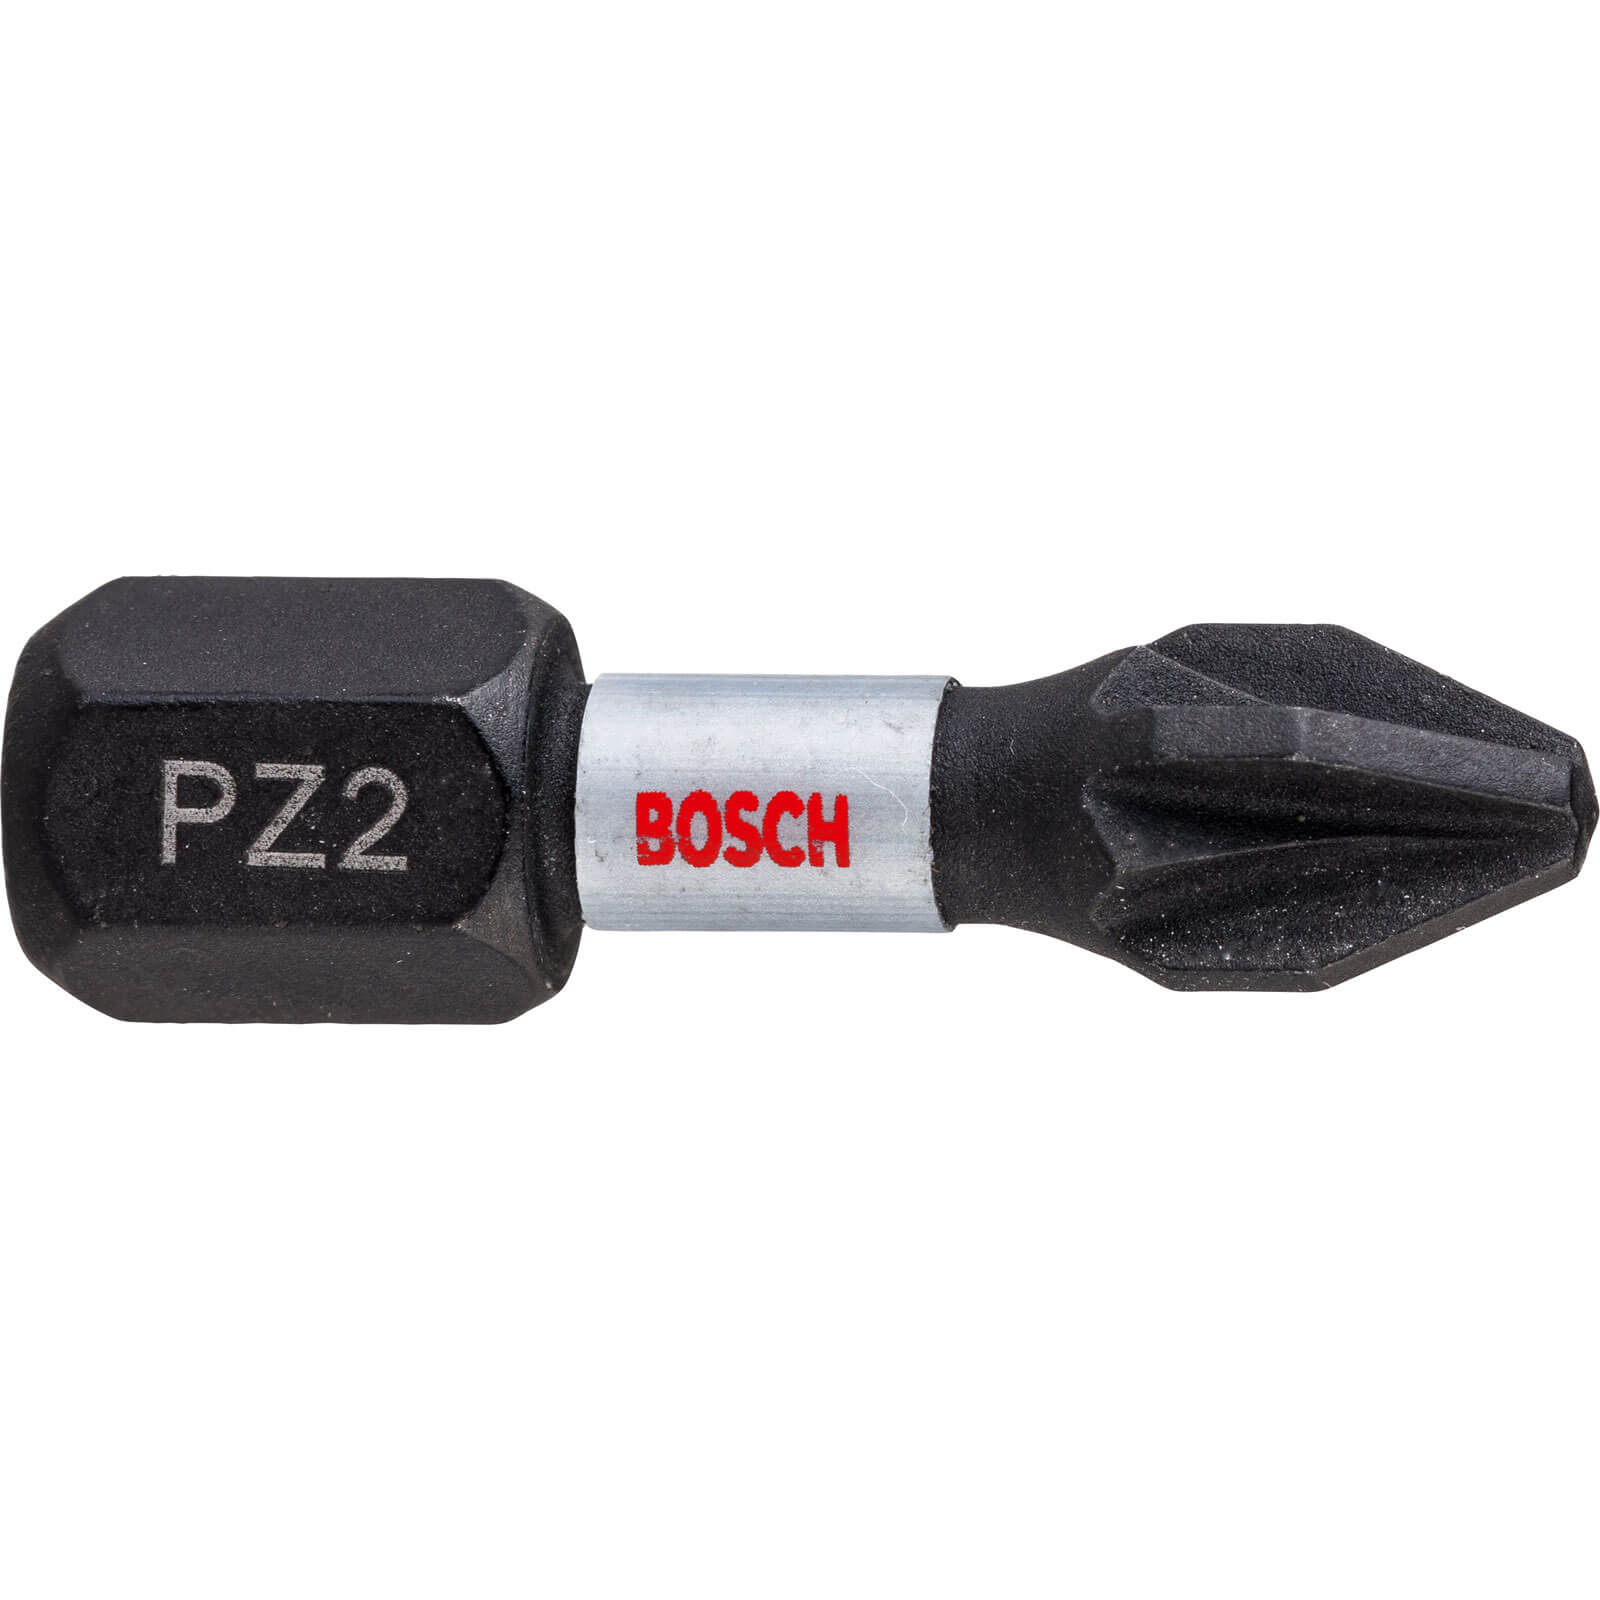 Image of Bosch Impact Control Torsion Pozi Screwdriver Bits PZ2 25mm Pack of 2